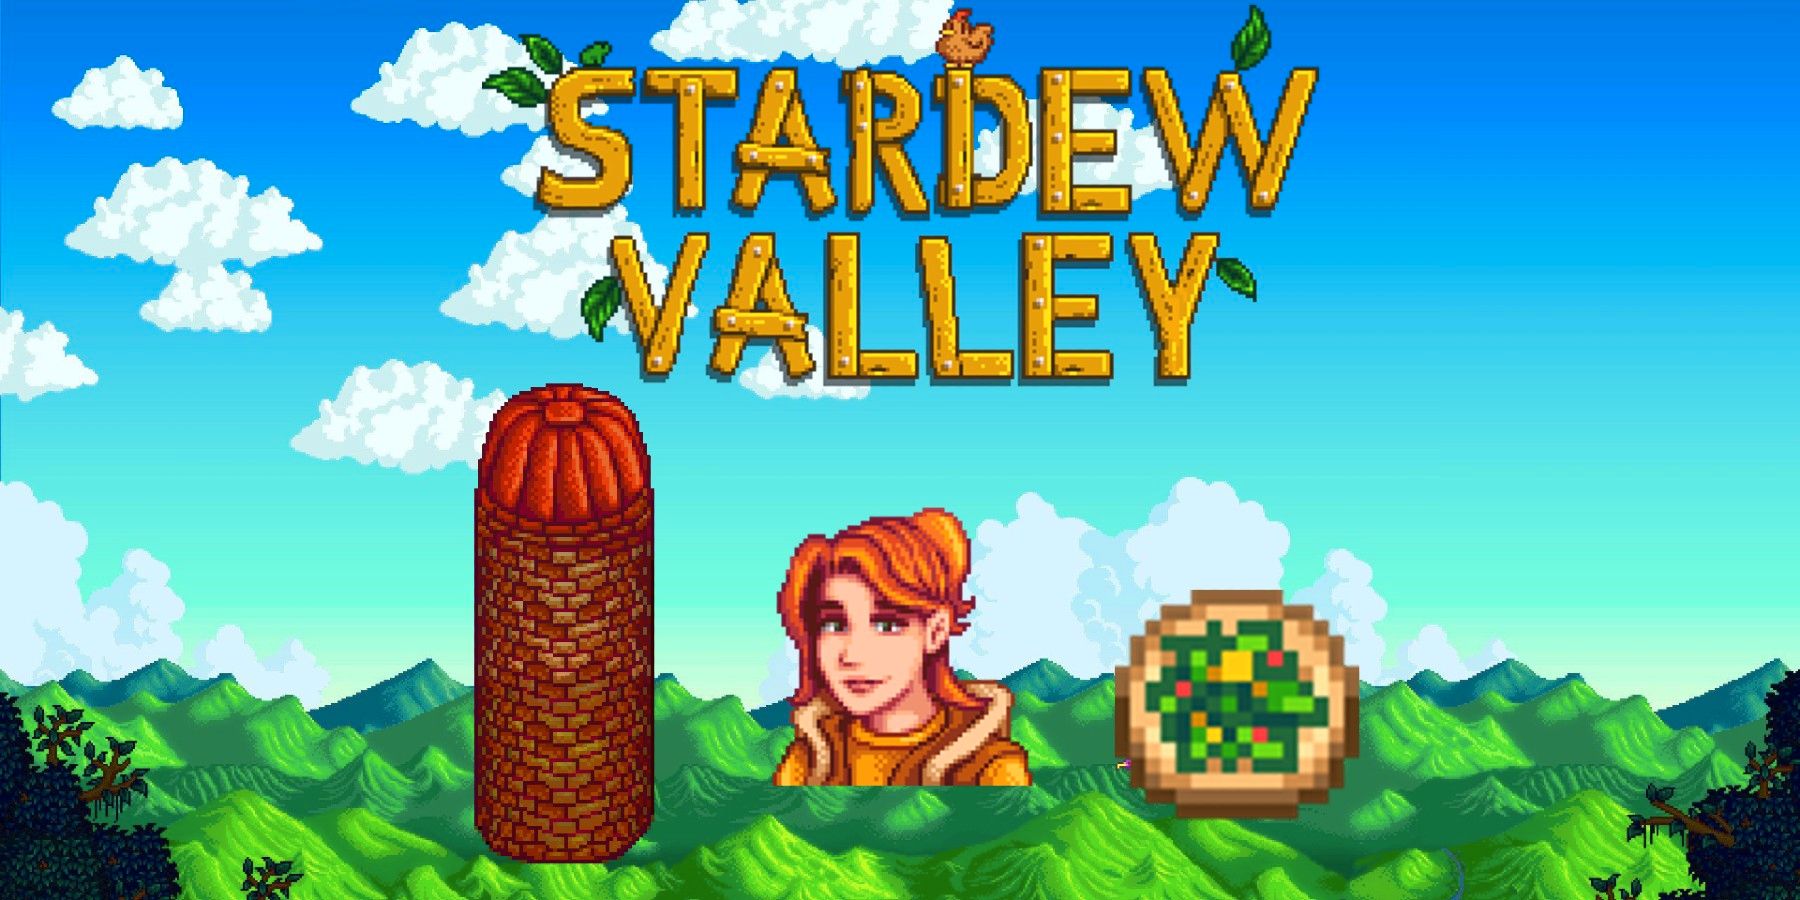 Stardew Valley Videoは、ゲームの経済における大きな欠陥を指摘しています